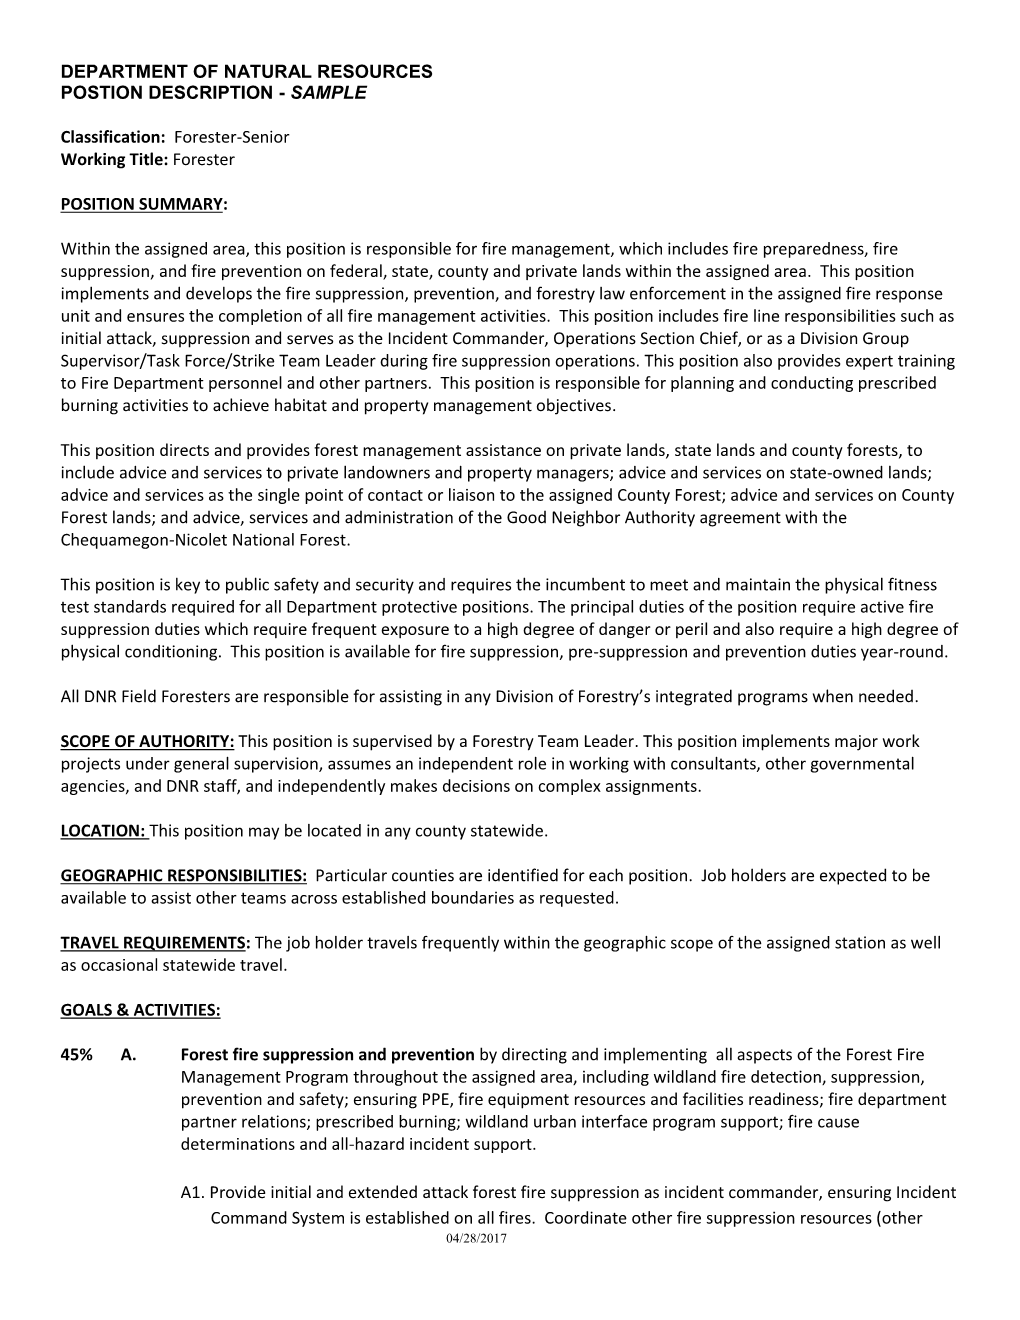 Department of Natural Resources Postion Description - Sample